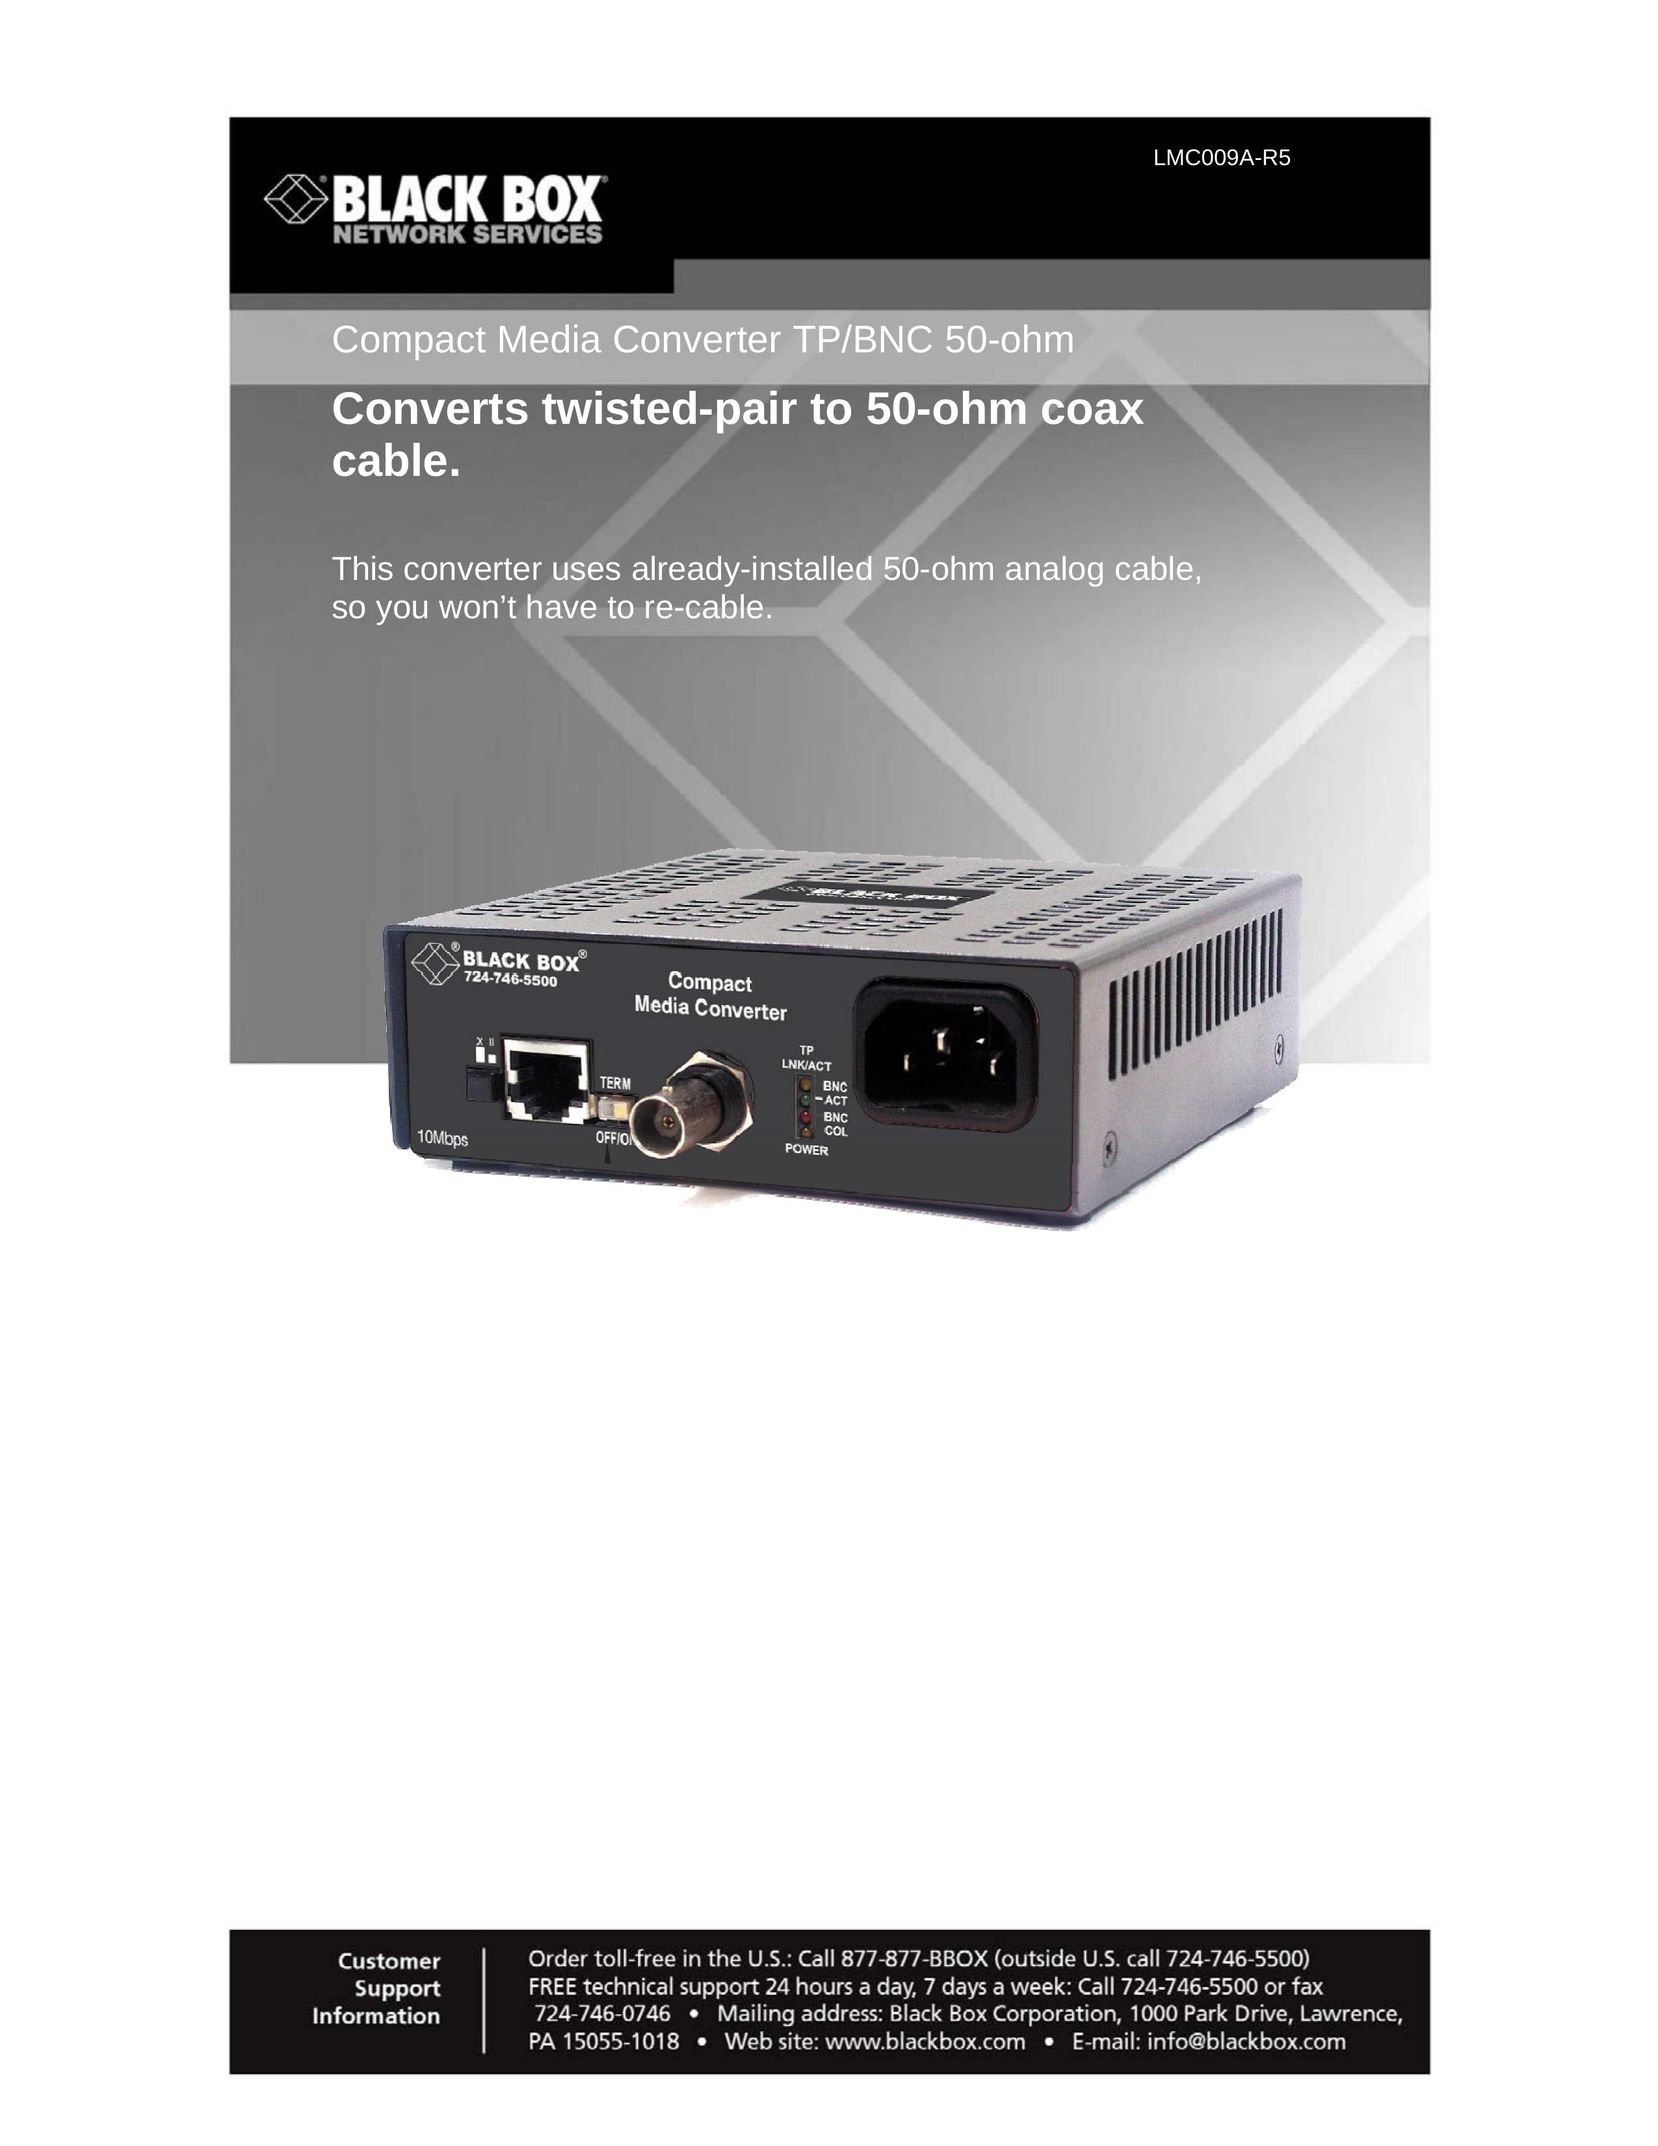 Black Box Compact Media Converter TP/BNC 50-ohm TV Converter Box User Manual